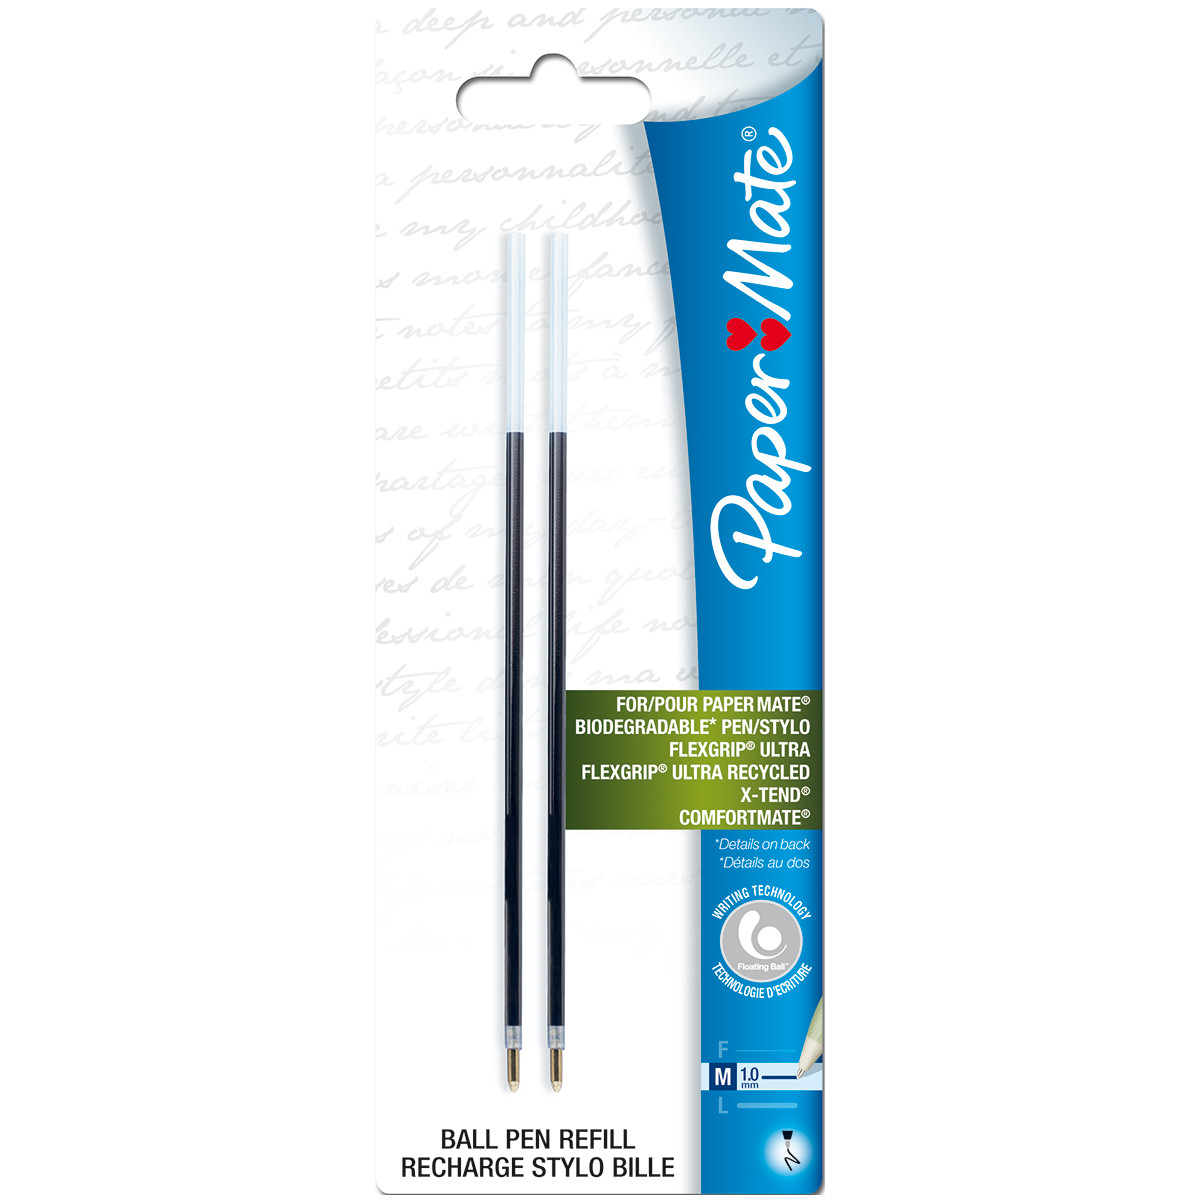 Papermate Biodegradable Ballpoint Pen Refills - Black Medium (Pack of 2)